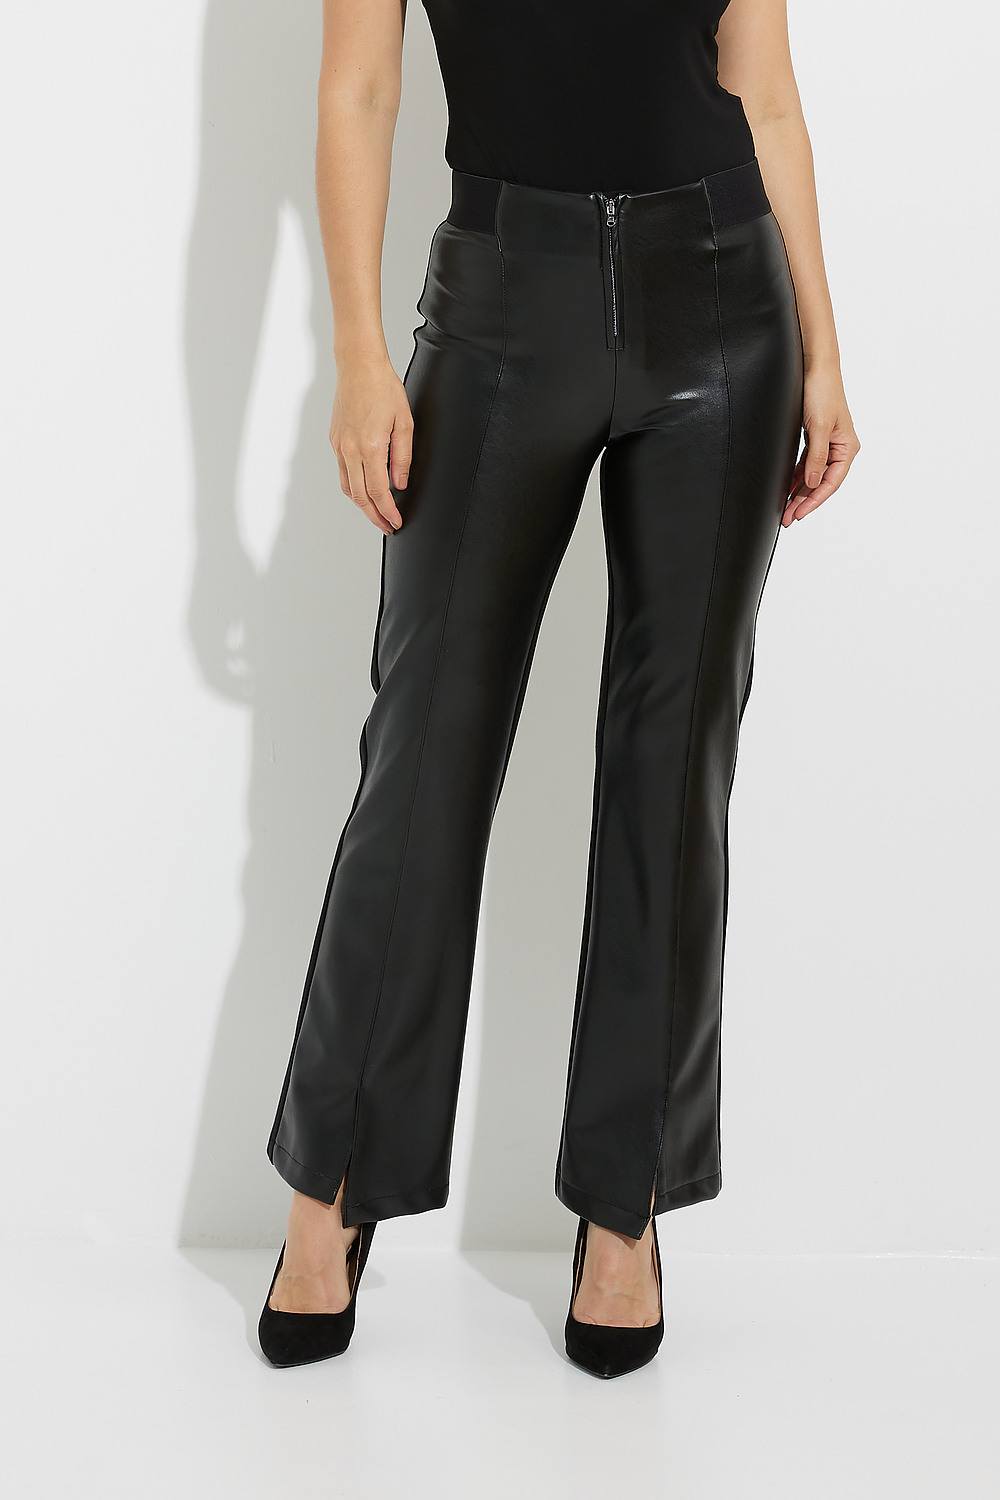 Joseph Ribkoff Leatherette Pants Style 224311